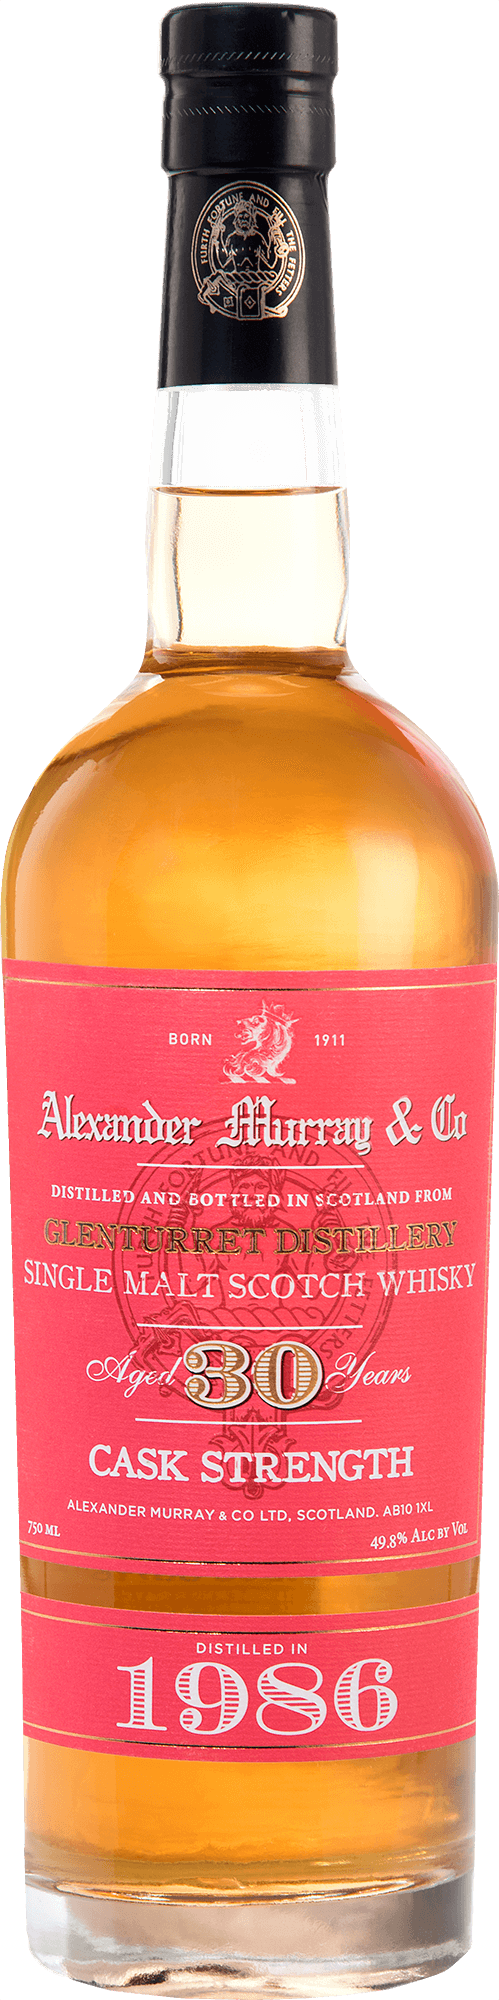 Alexander Murray 1986 Glenturret 30 Year Old Single Malt Scotch Whisky